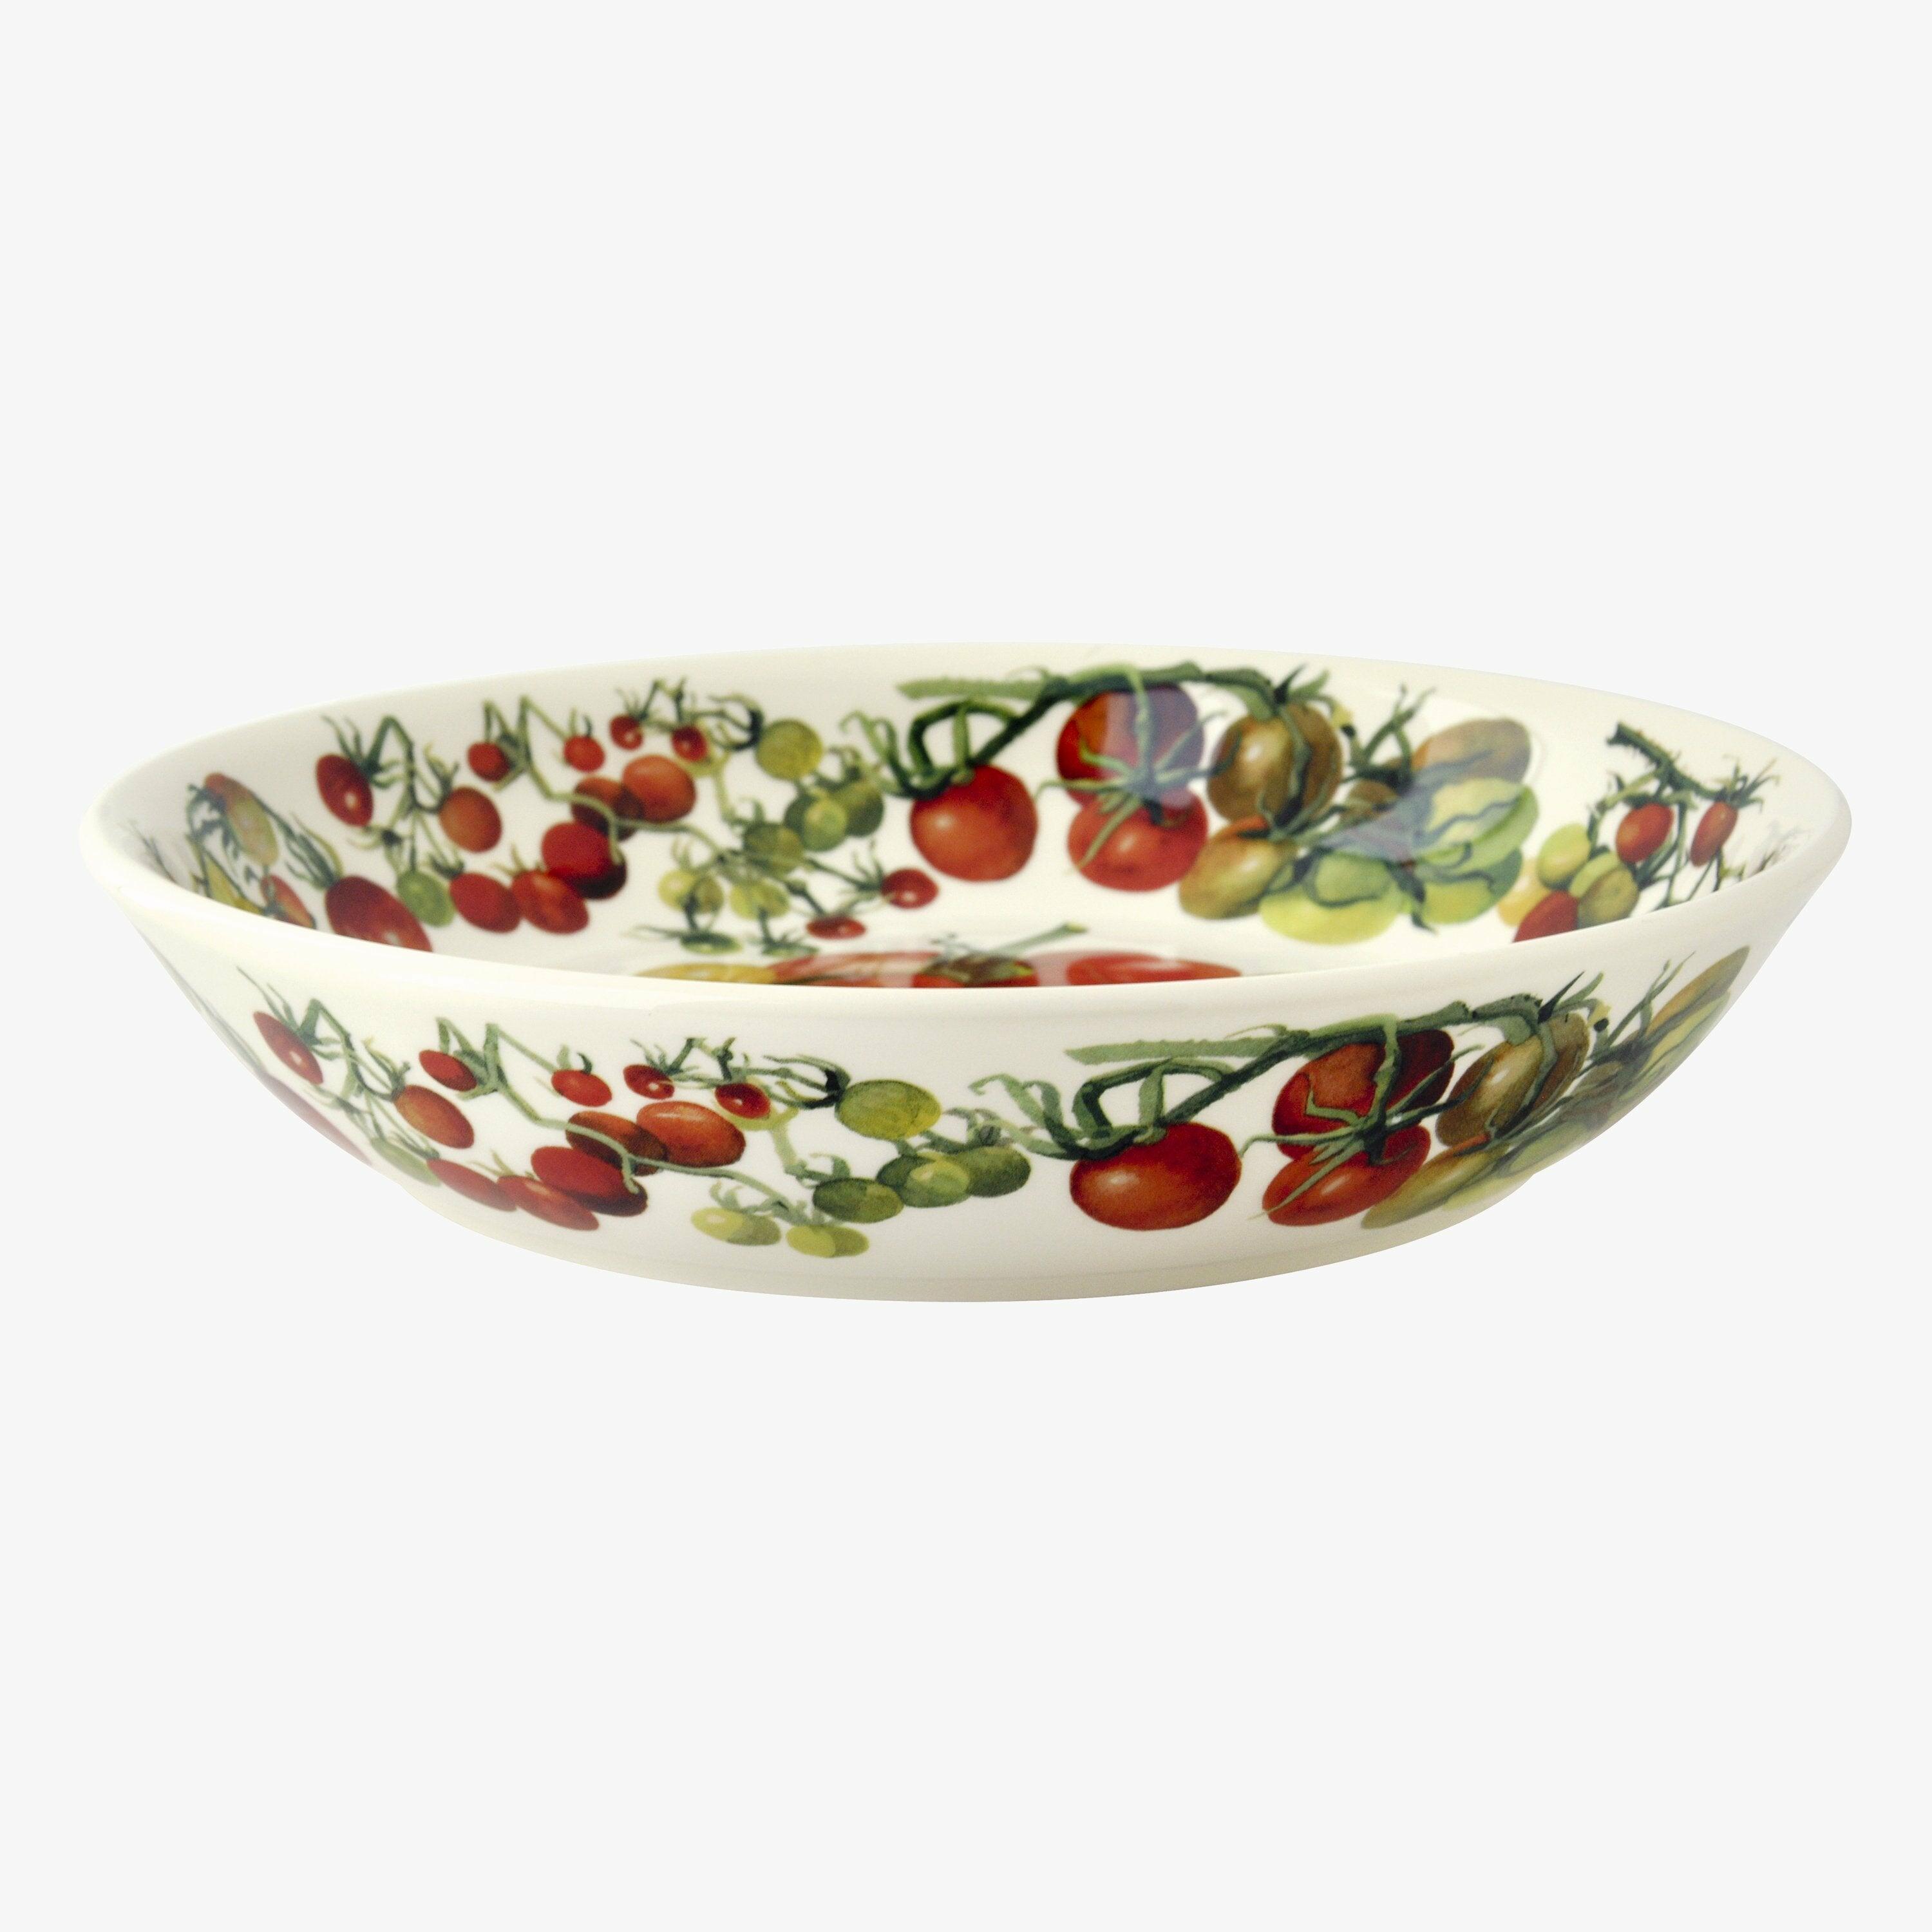 Emma Bridgewater  Vegetable Garden Tomatoes Medium Pasta Bowl - Unique Handmade & Handpainted English Earthenware Decorative Plates